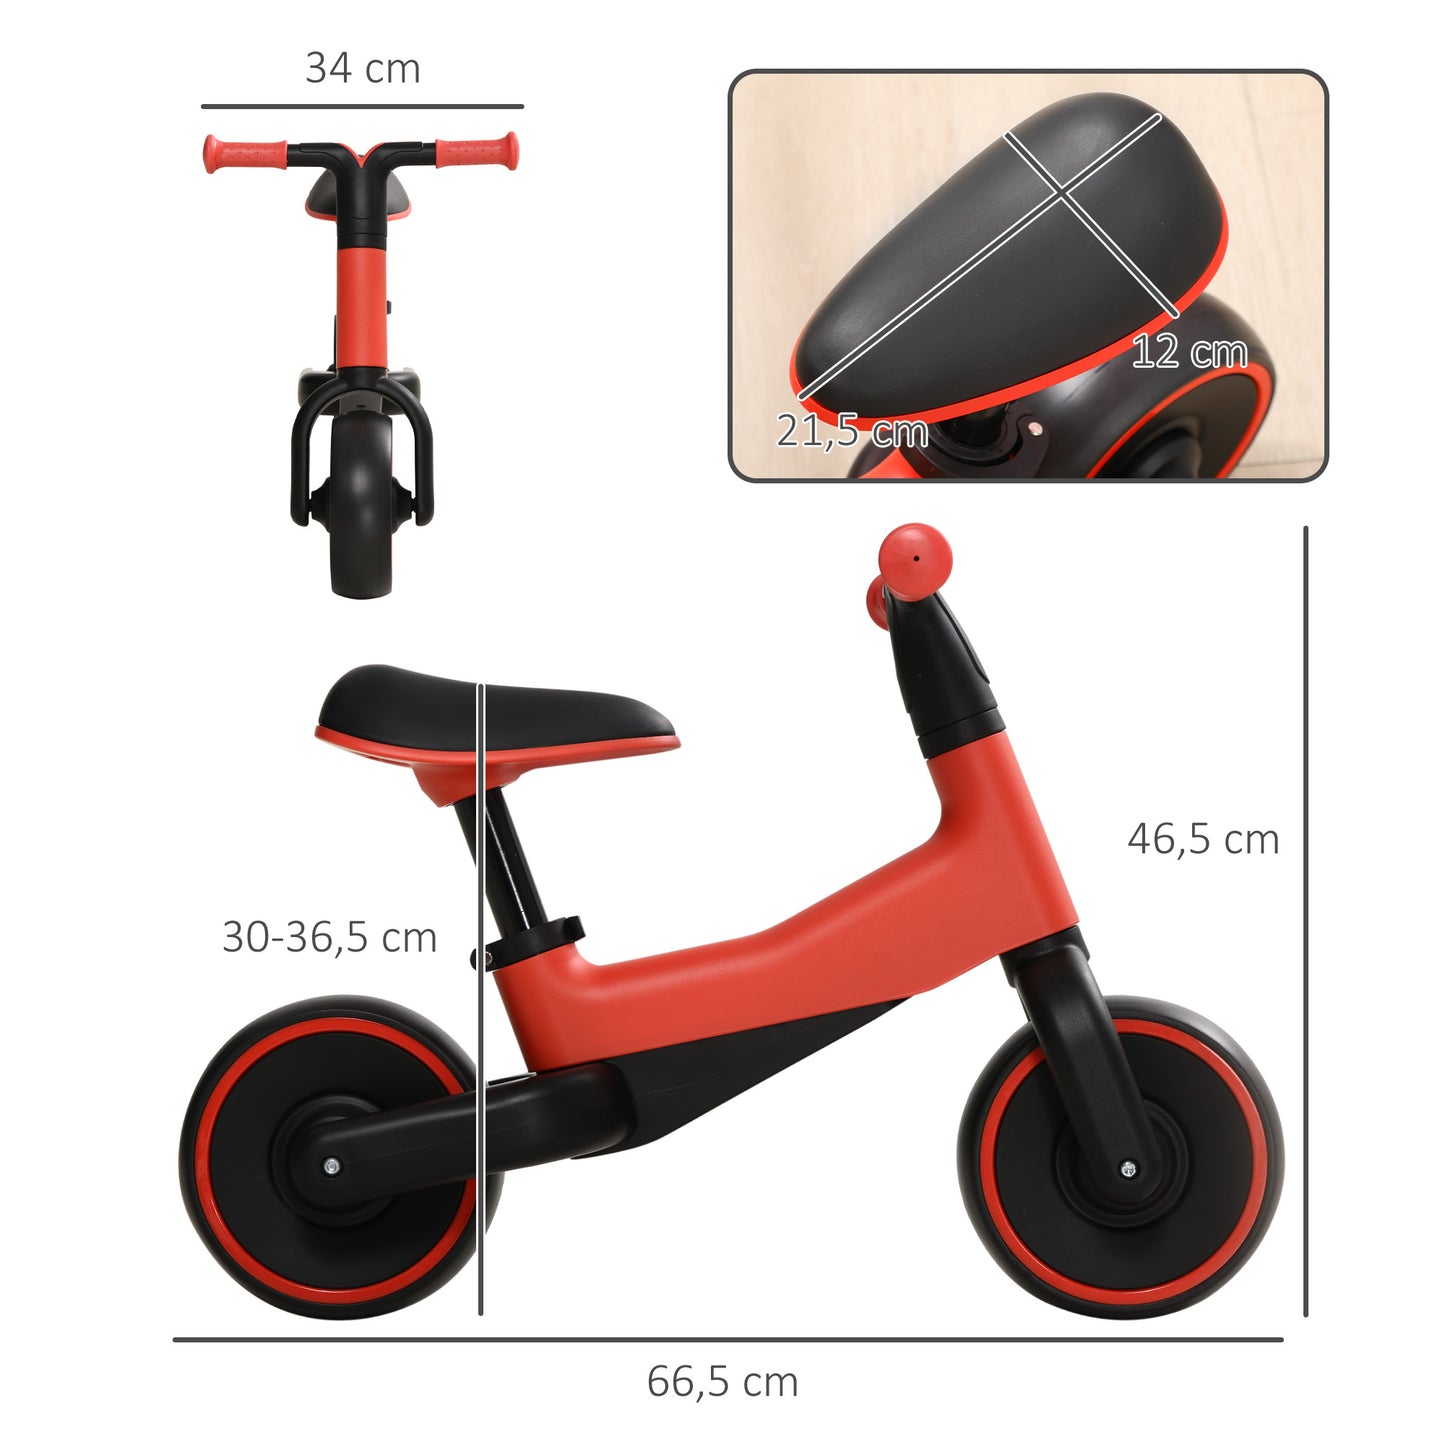 AIYAPLAY Bicicleta sin Pedales para Niños de + 18 Meses Triciclo Infantil para Bebé con Sillín Ajustable en 30-36,5 cm Ruedas de Ø19 cm Carga 25 kg 66,5x34x46,5 cm Rojo